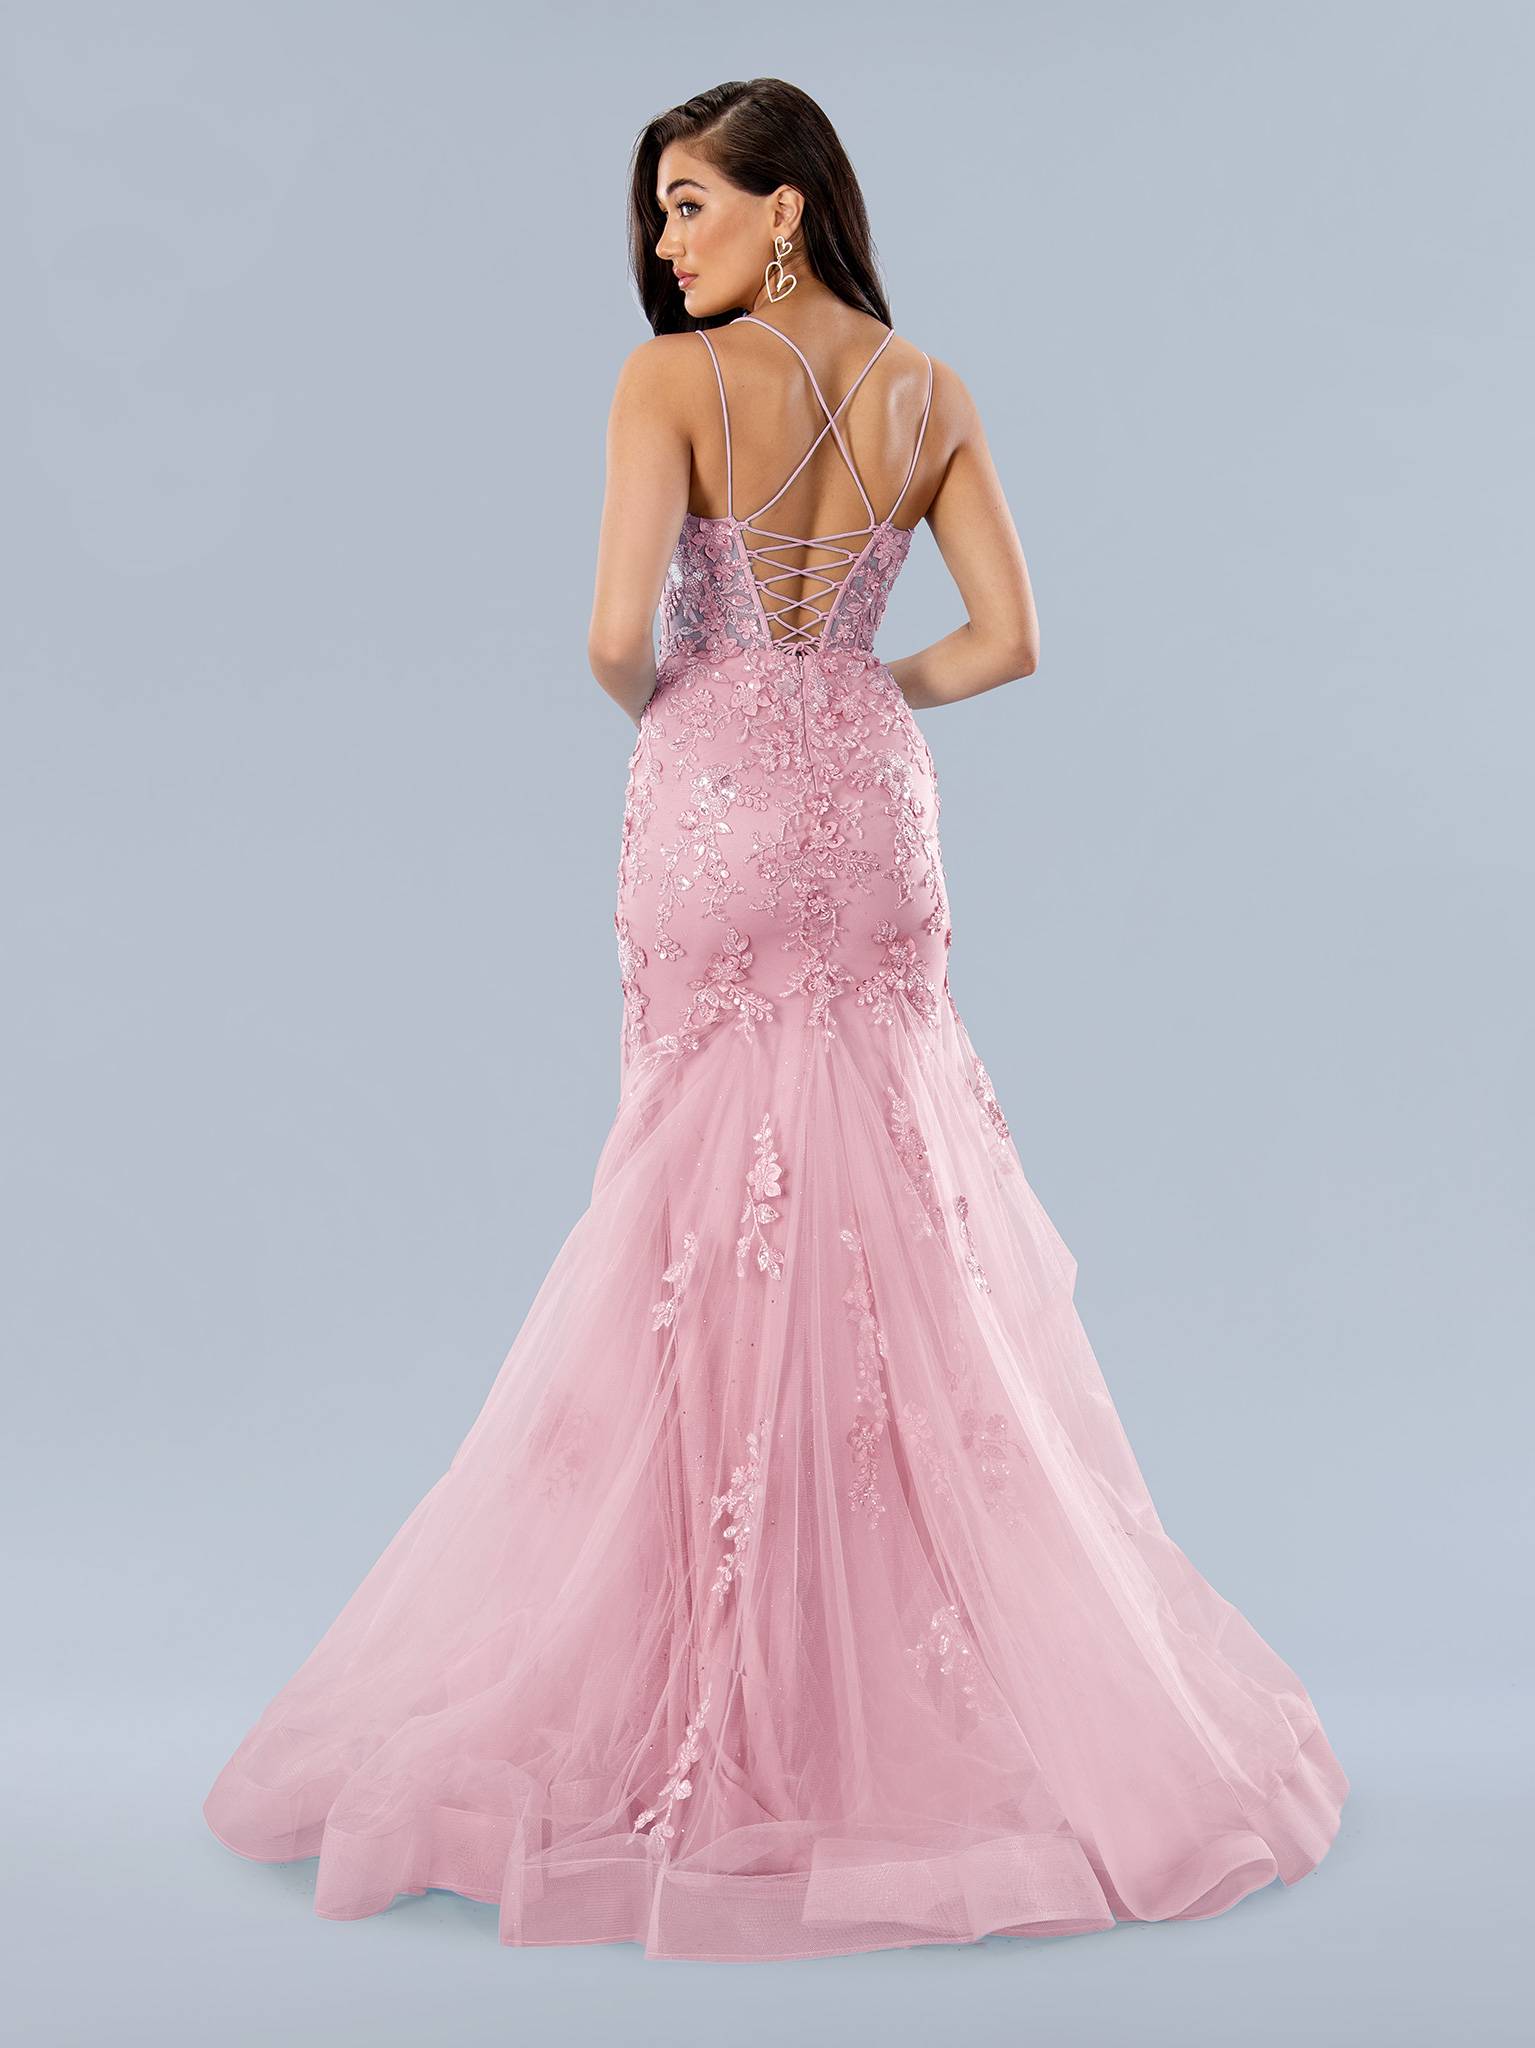 Sparkling Pink Rhinestone Mermaid Pink Corset Prom Dress With Beaded  Taffeta For Women From Weddingplanning, $124.81